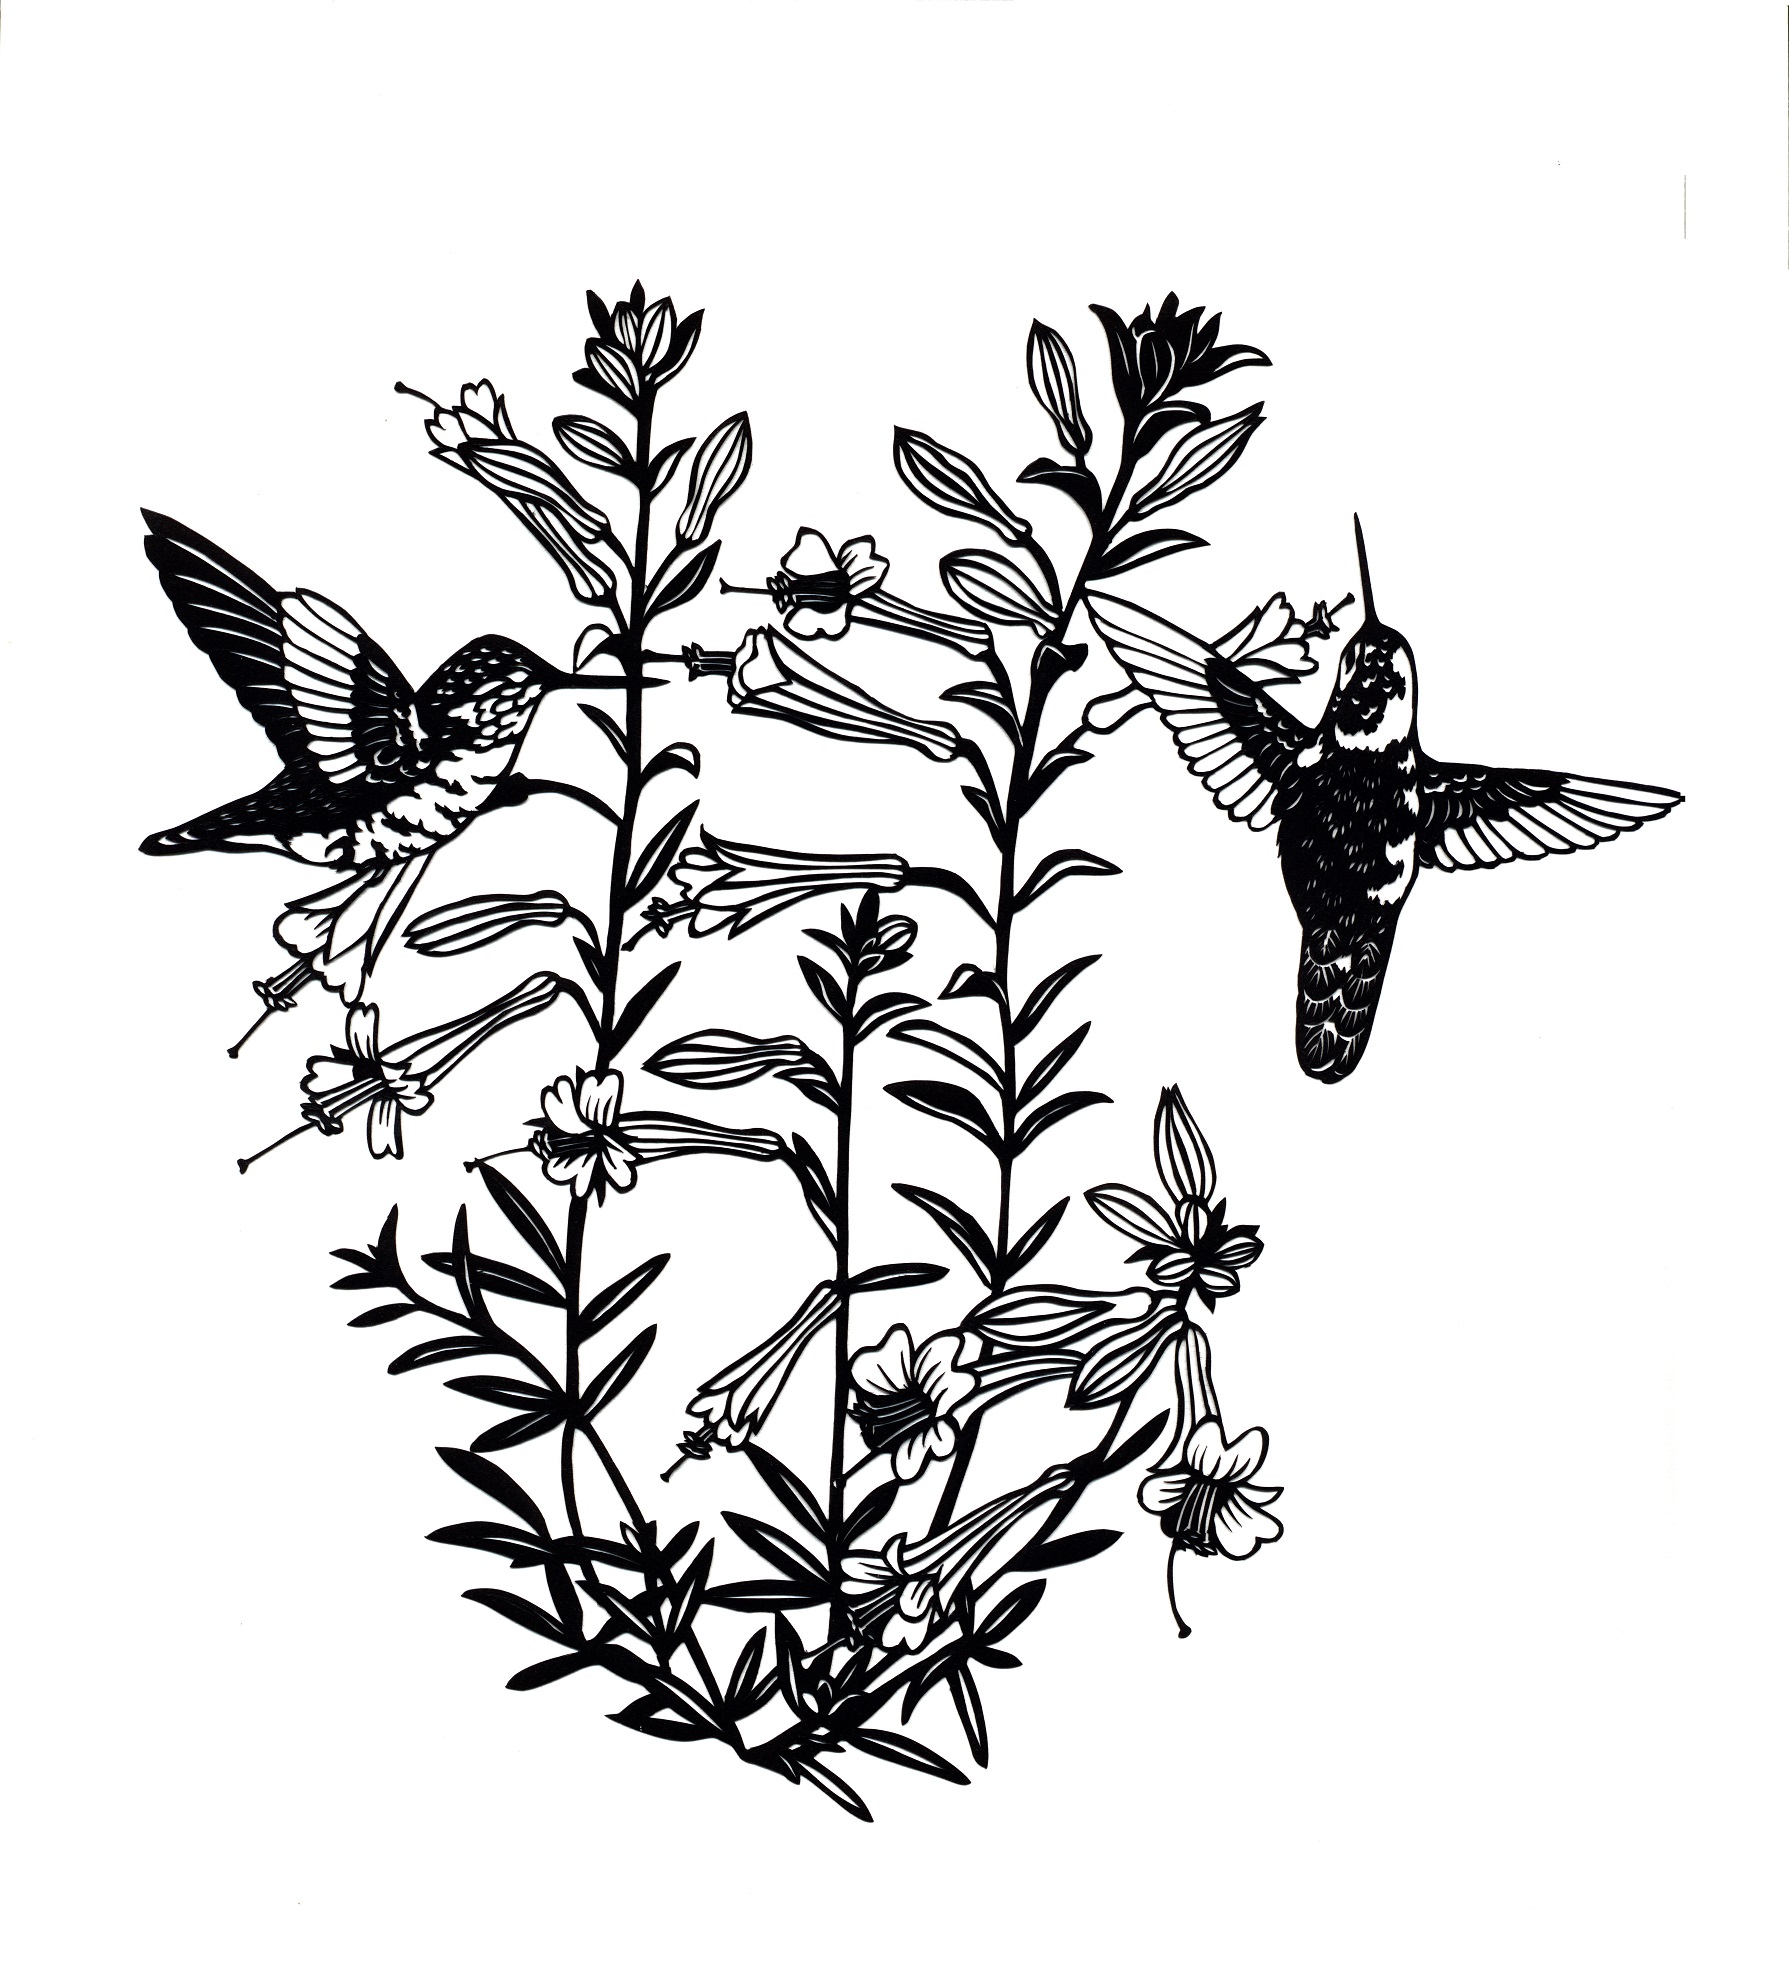 Anna’s hummingbird (Calypte anna) and California fuchsia (Epilobium canum)